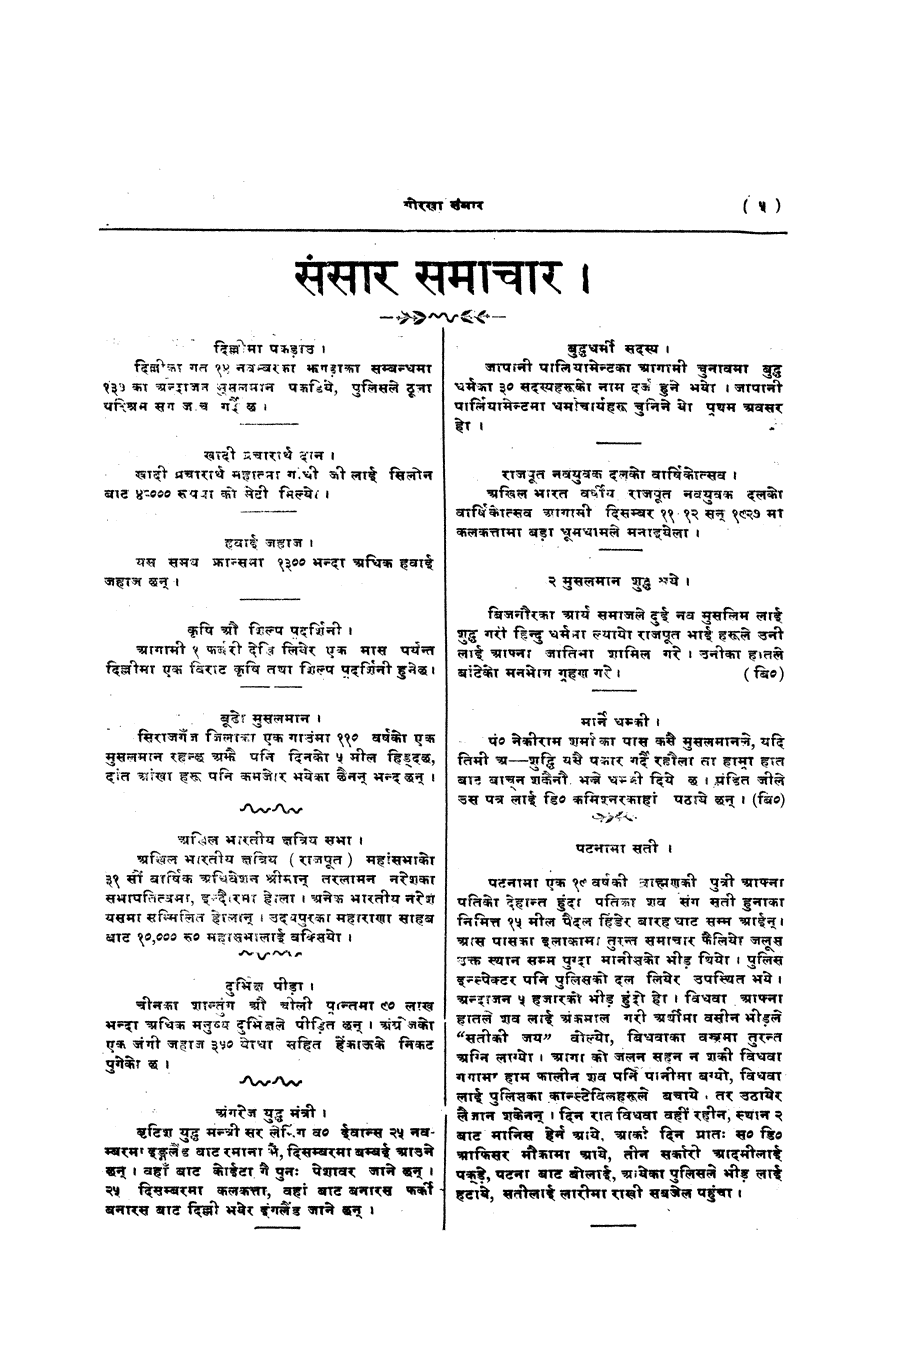 Gorkha Sansar, 5 Dec 1927, page 7